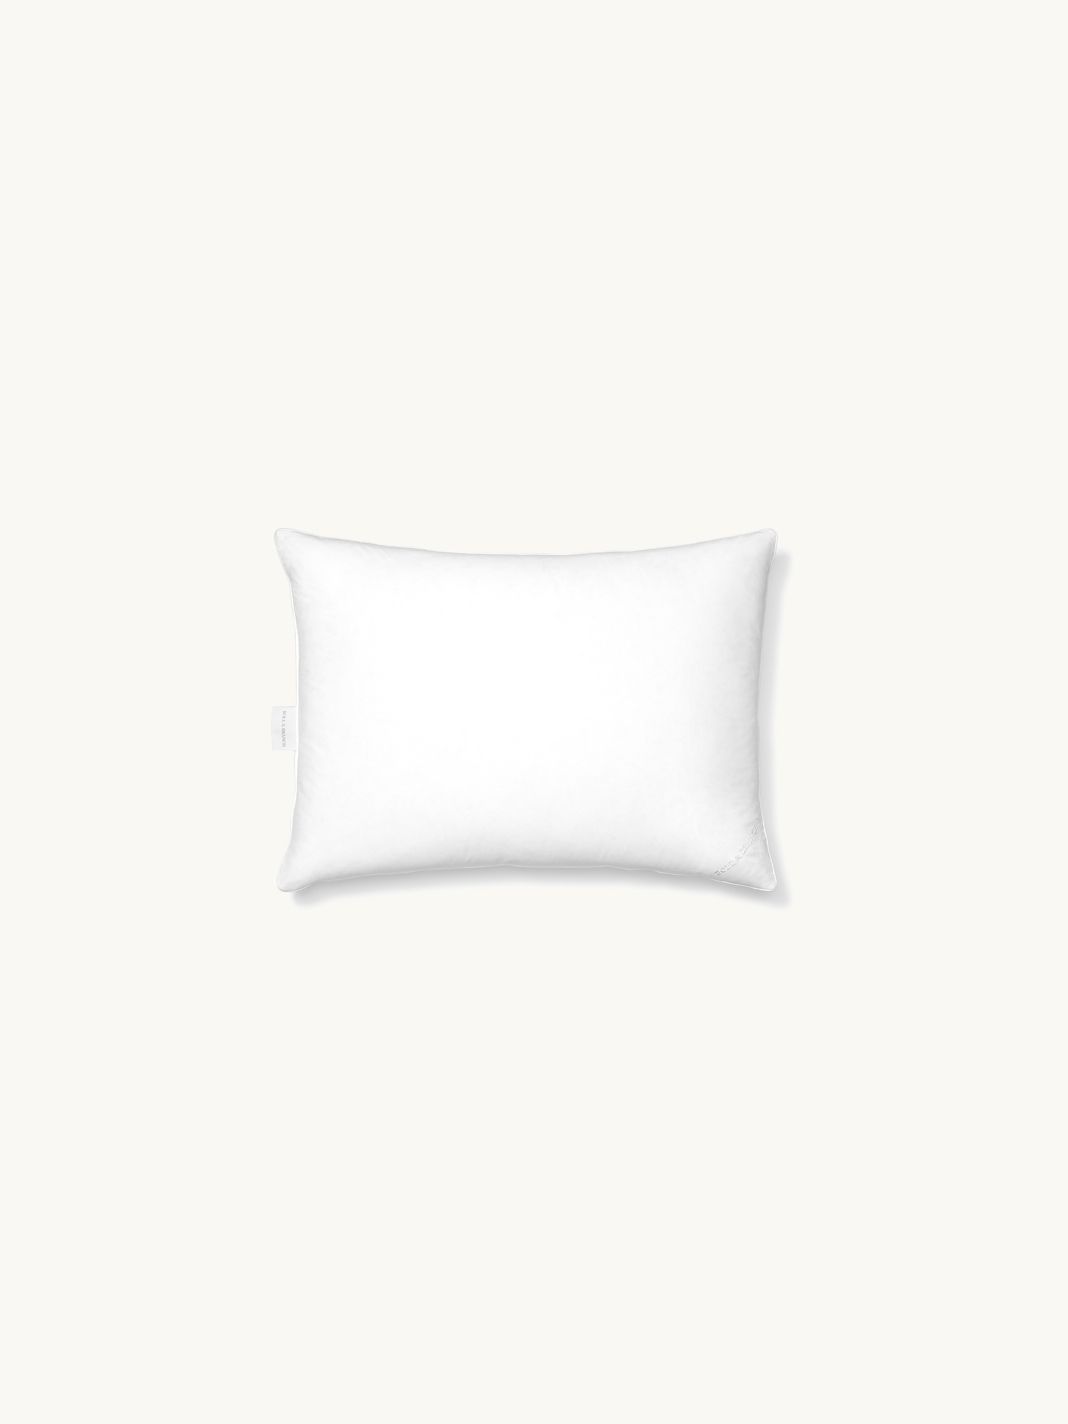 Primaloft® Down Alternative Pillow Insert - Boll & Branch | Boll & Branch